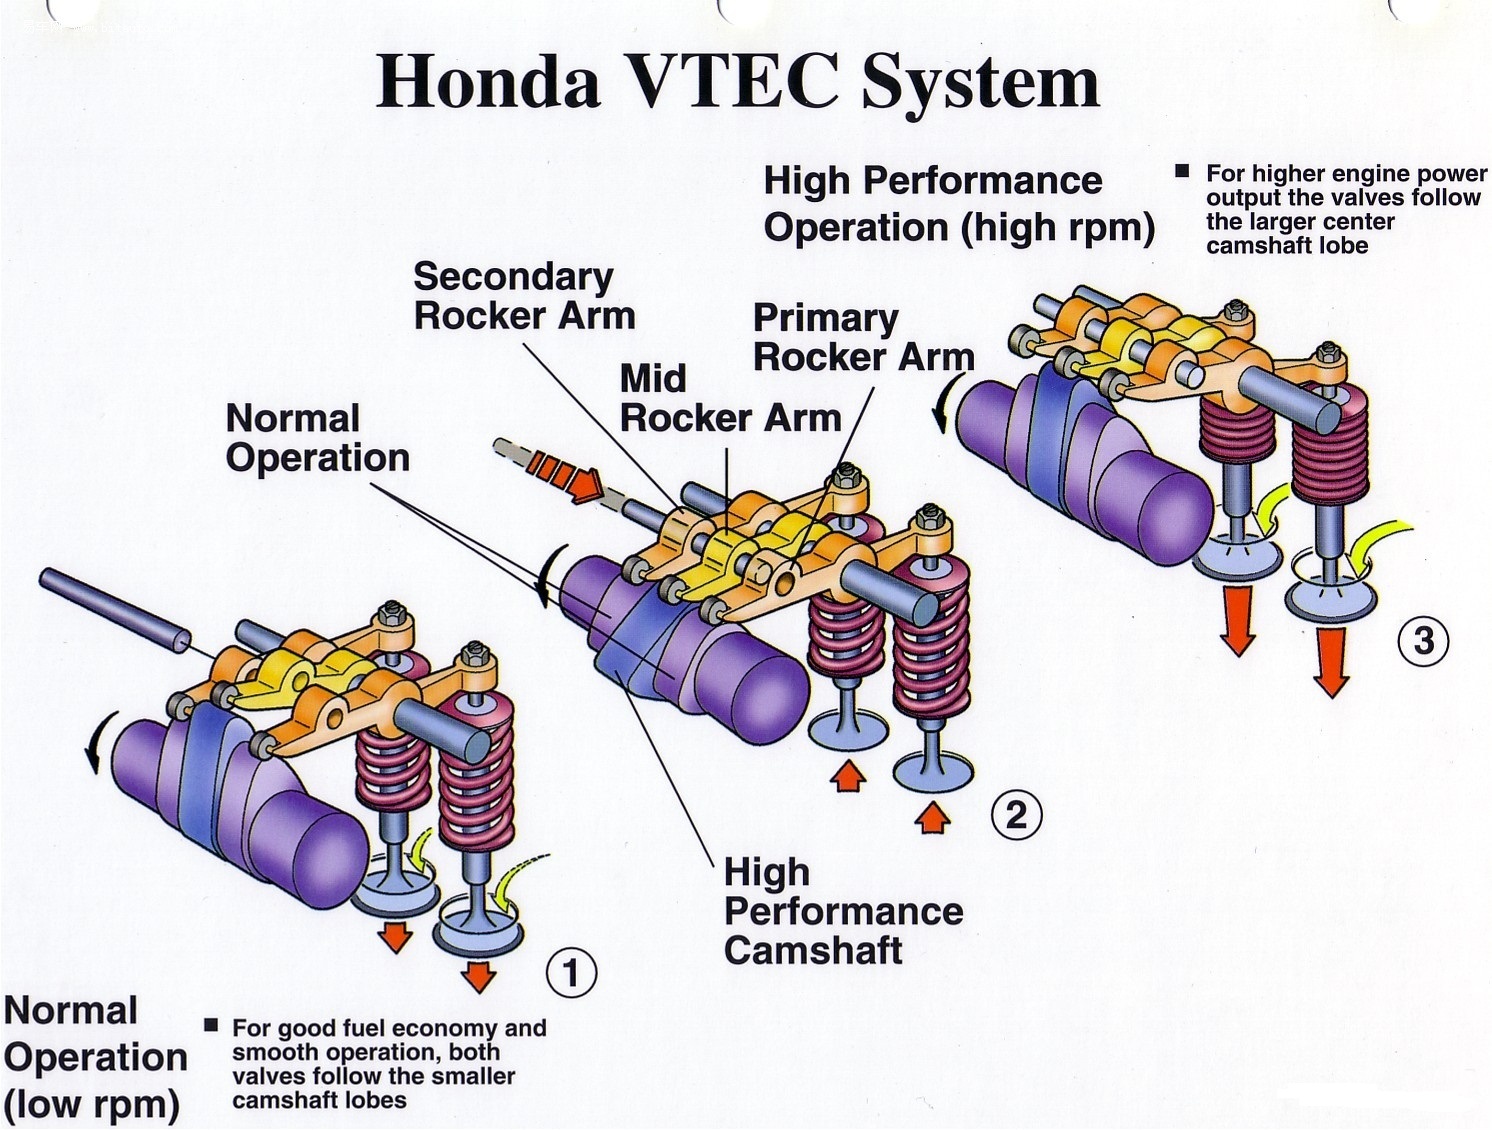 Working Principle of i-VTEC Technology from Honda